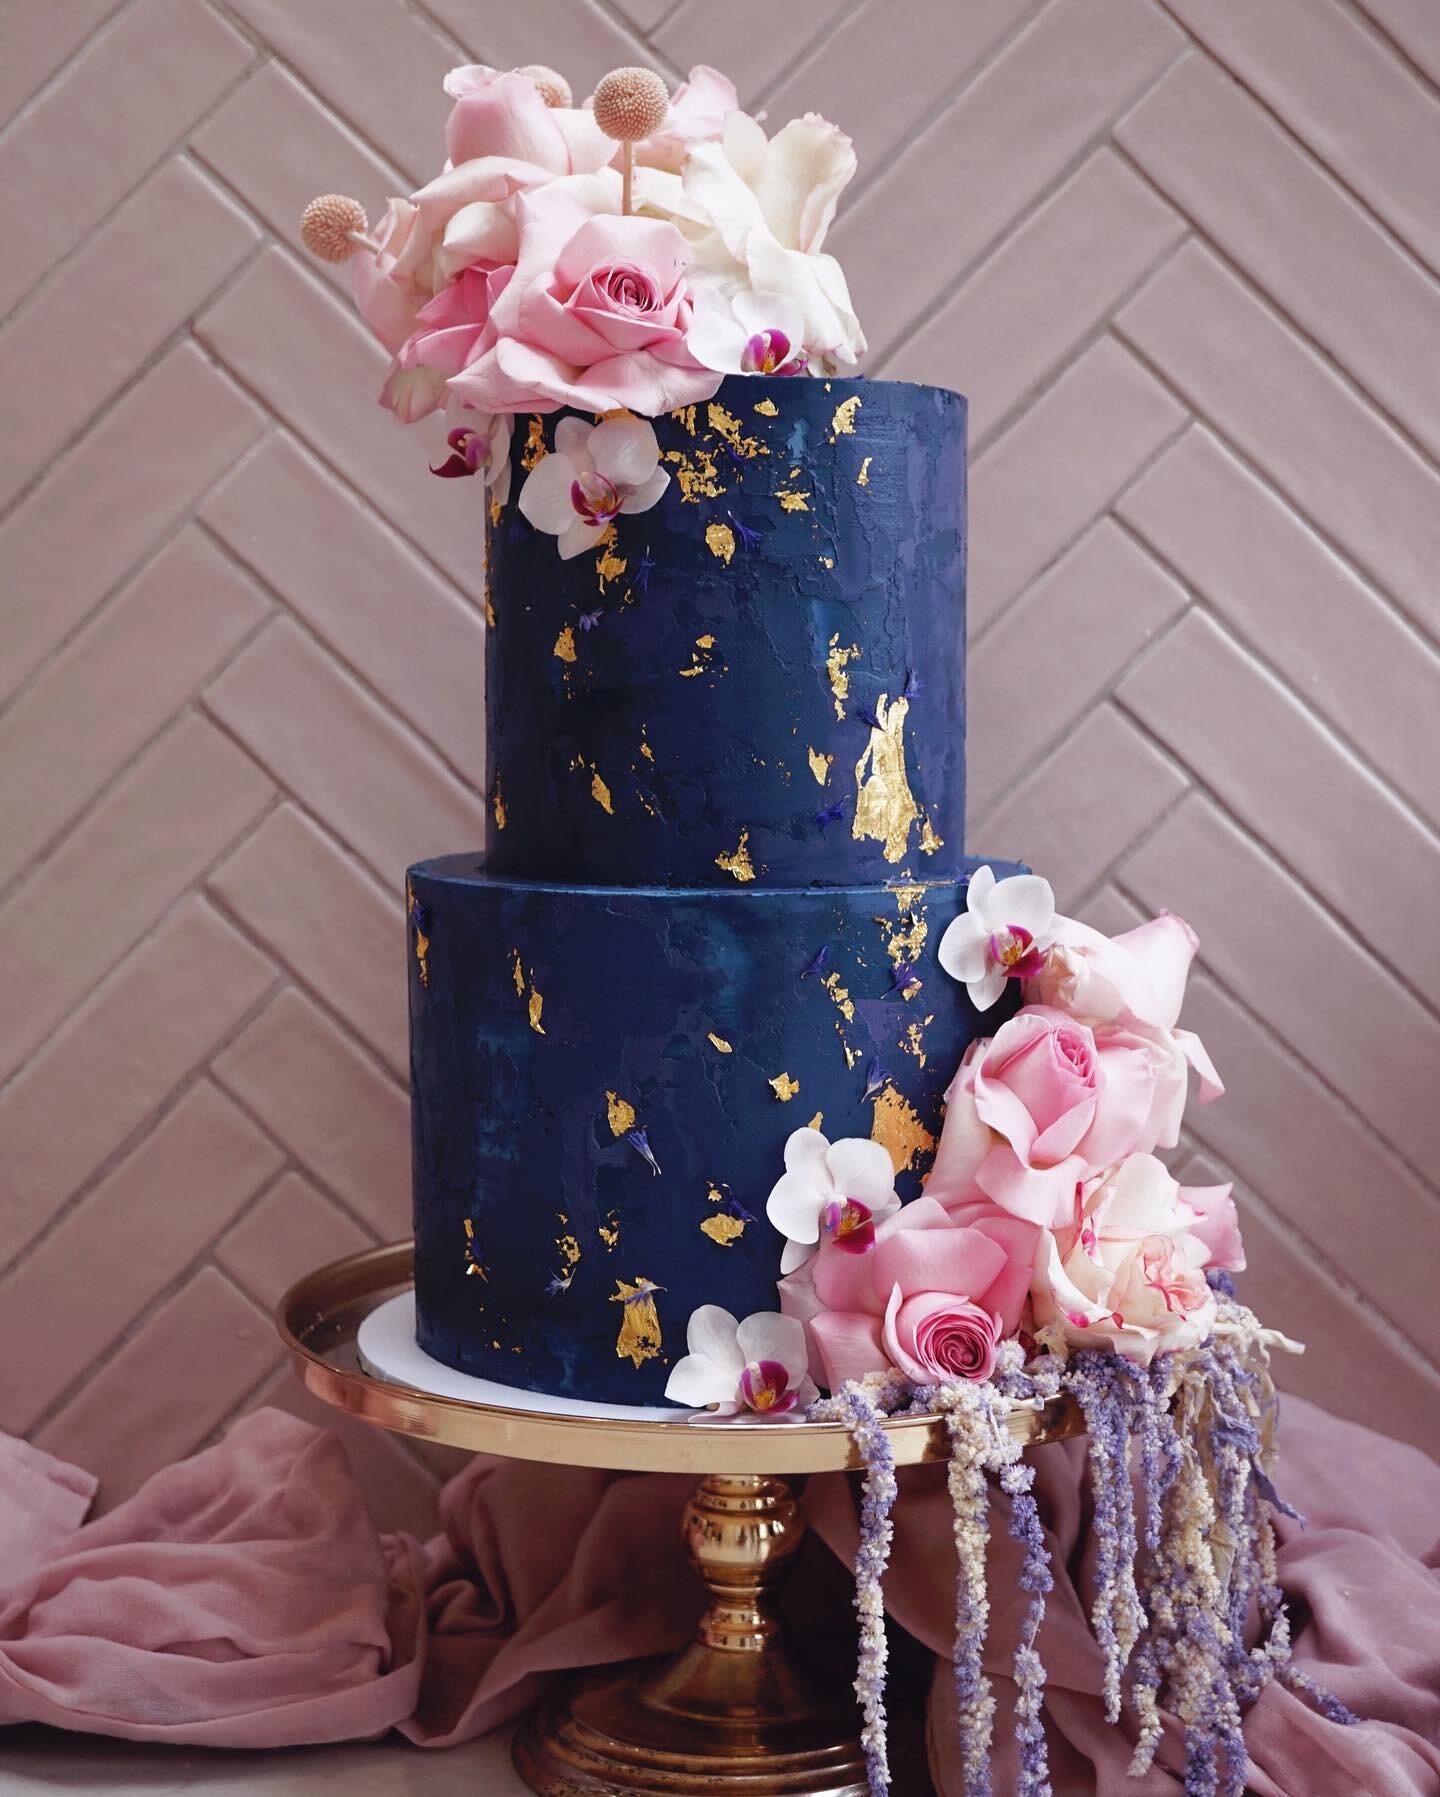 💙🌸 EIGHTEEN 🌸💙
I absolutely loved making this gorgeous navy two tier 18th birthday cake. 
⠀⠀⠀⠀⠀⠀⠀⠀⠀
⠀⠀⠀⠀⠀⠀⠀⠀⠀
⠀⠀⠀⠀⠀⠀⠀⠀⠀
birthdaycake #pastelcake #pinkcake #buttercream #dripcake #cake #cakemaker #cakedecorating #instacake #instacakes #baker #bake